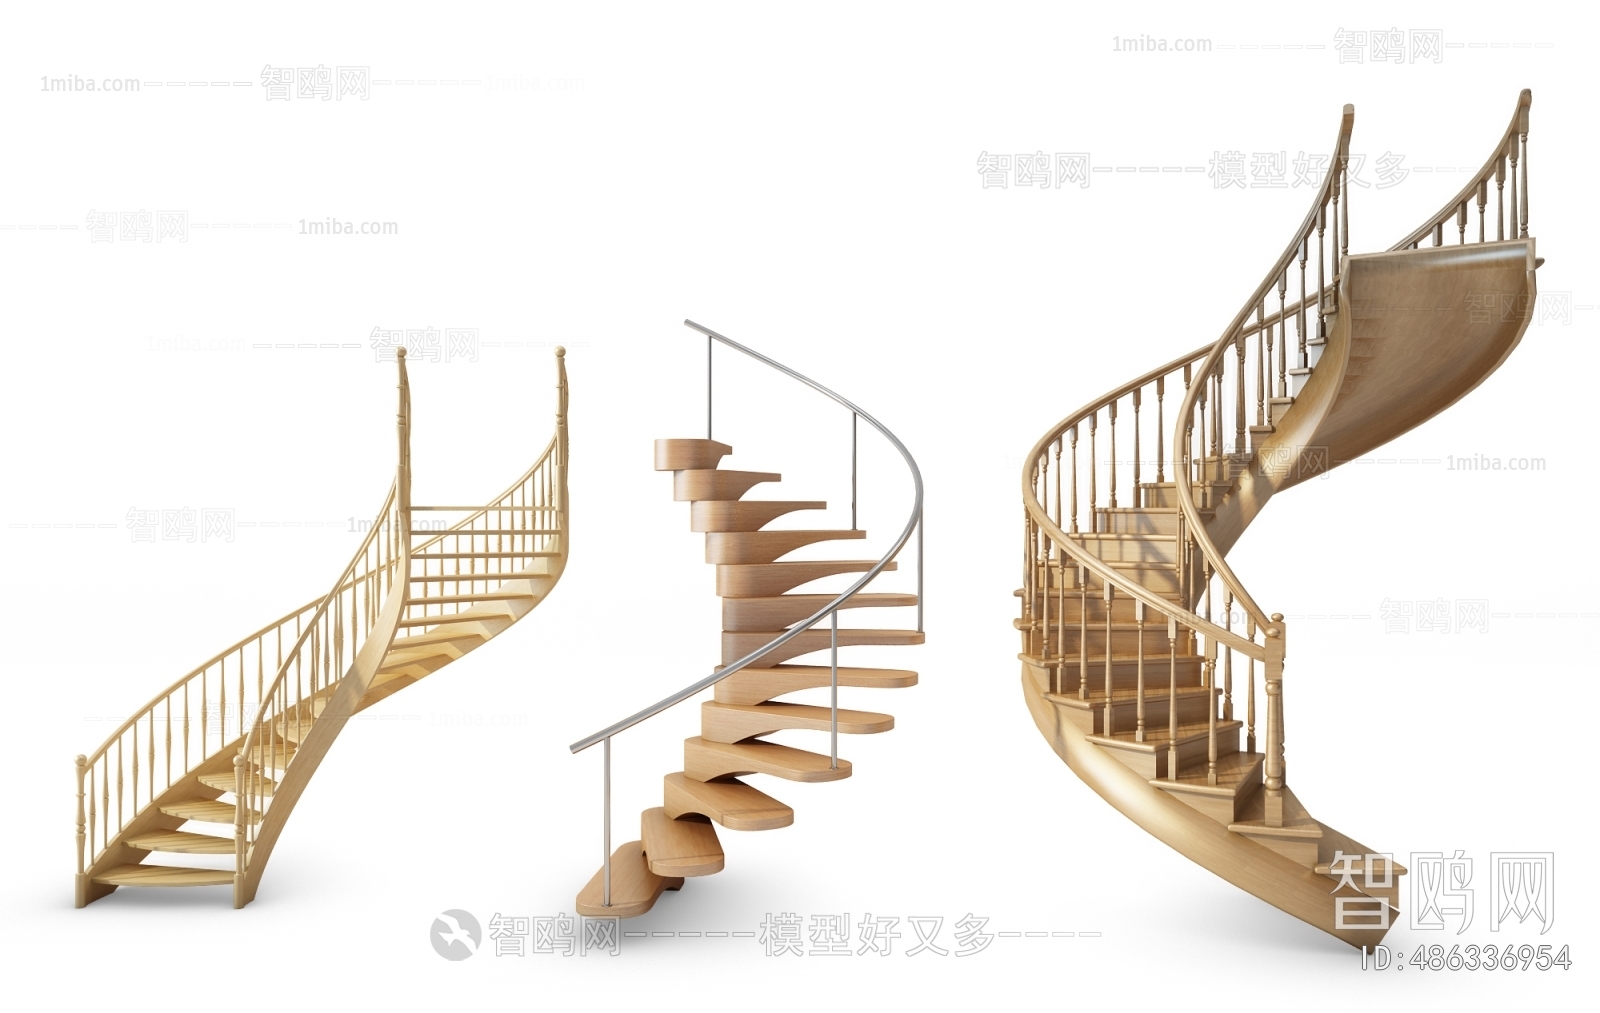 European Style Rotating Staircase